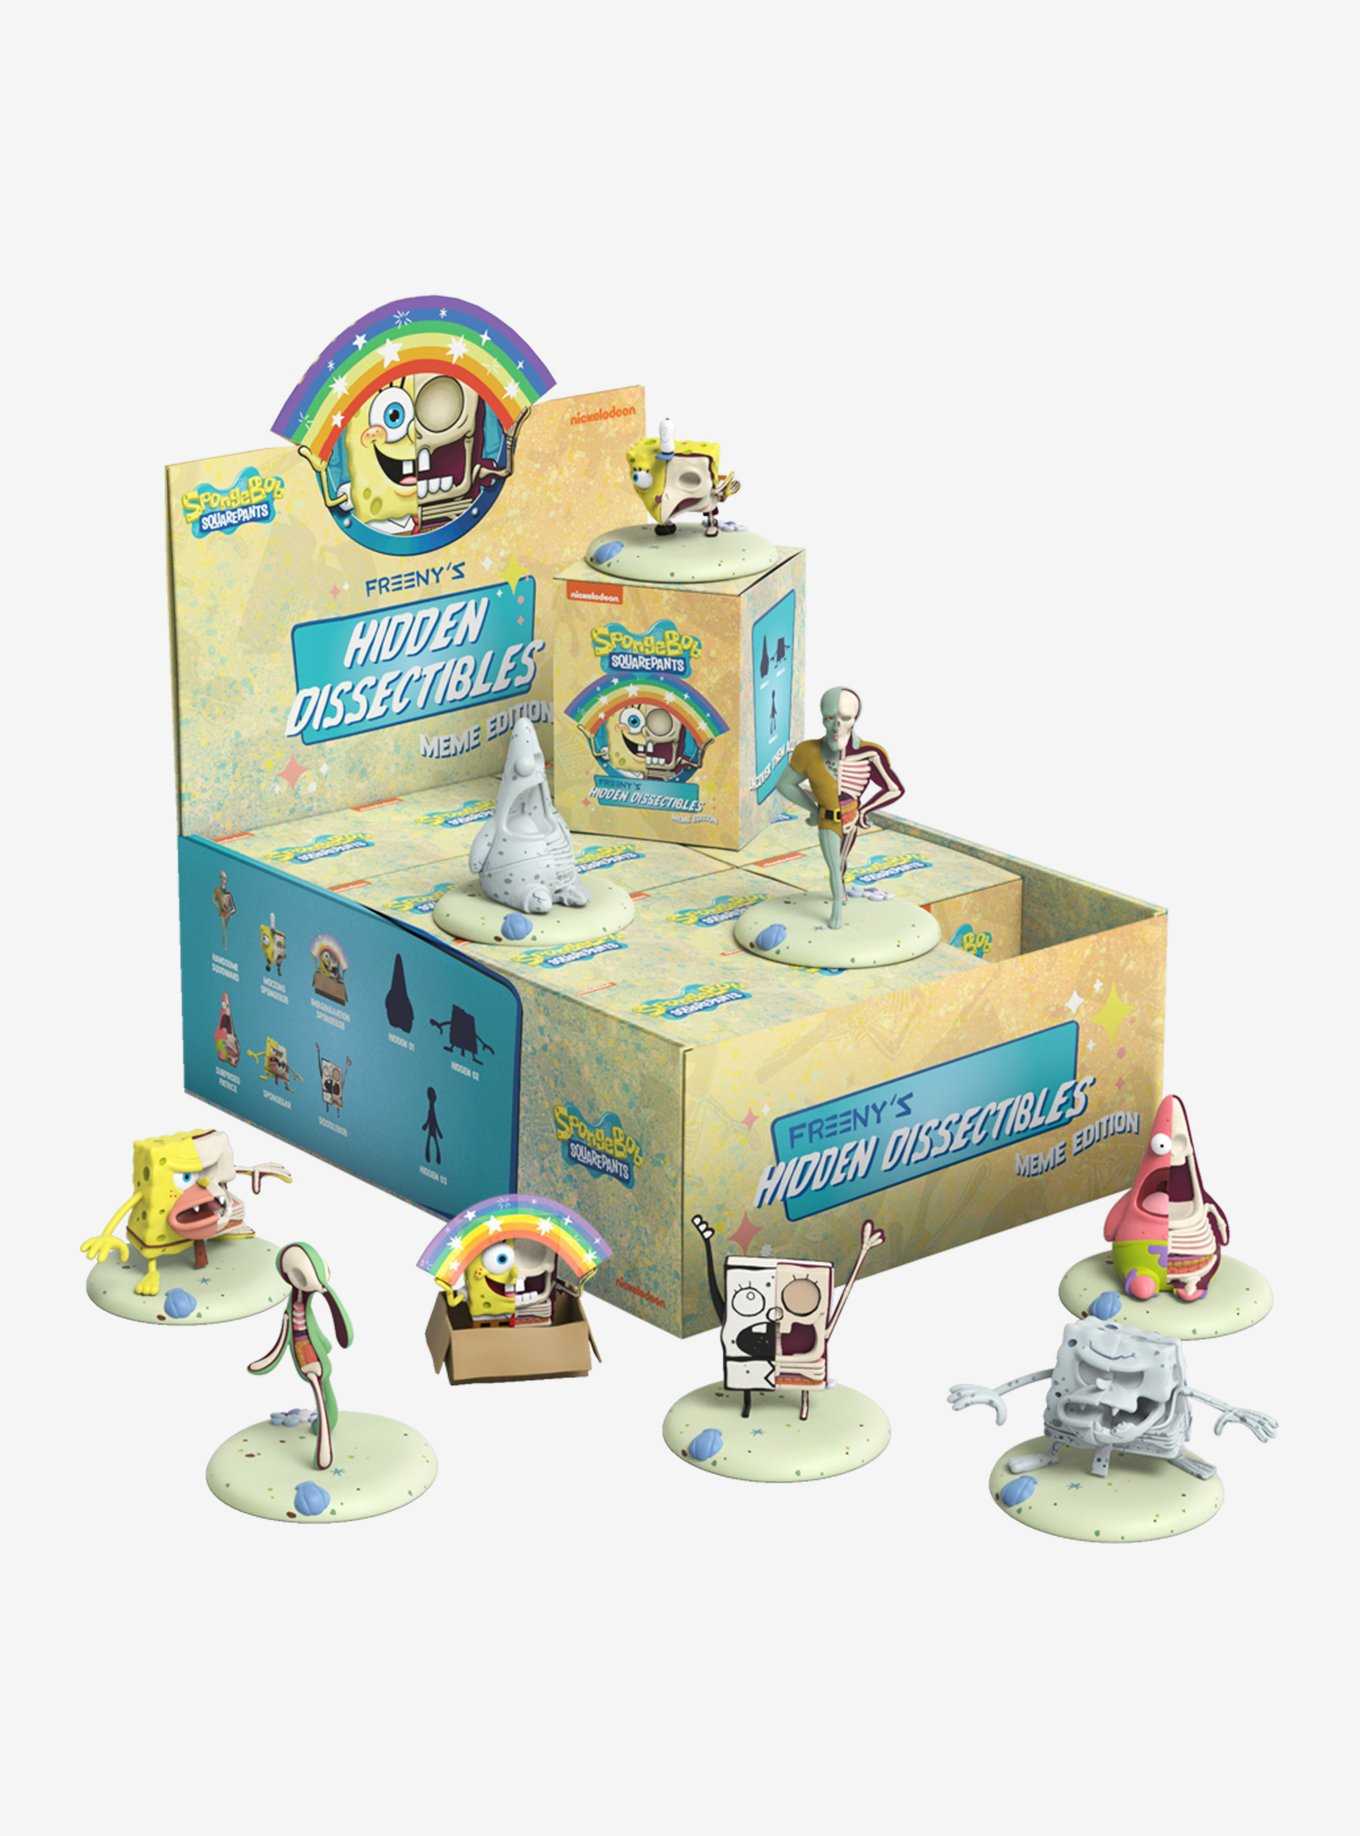 SpongeBob SquarePants Freeny's Hidden Dissectibles Meme Edition Blind Box Figure, , hi-res